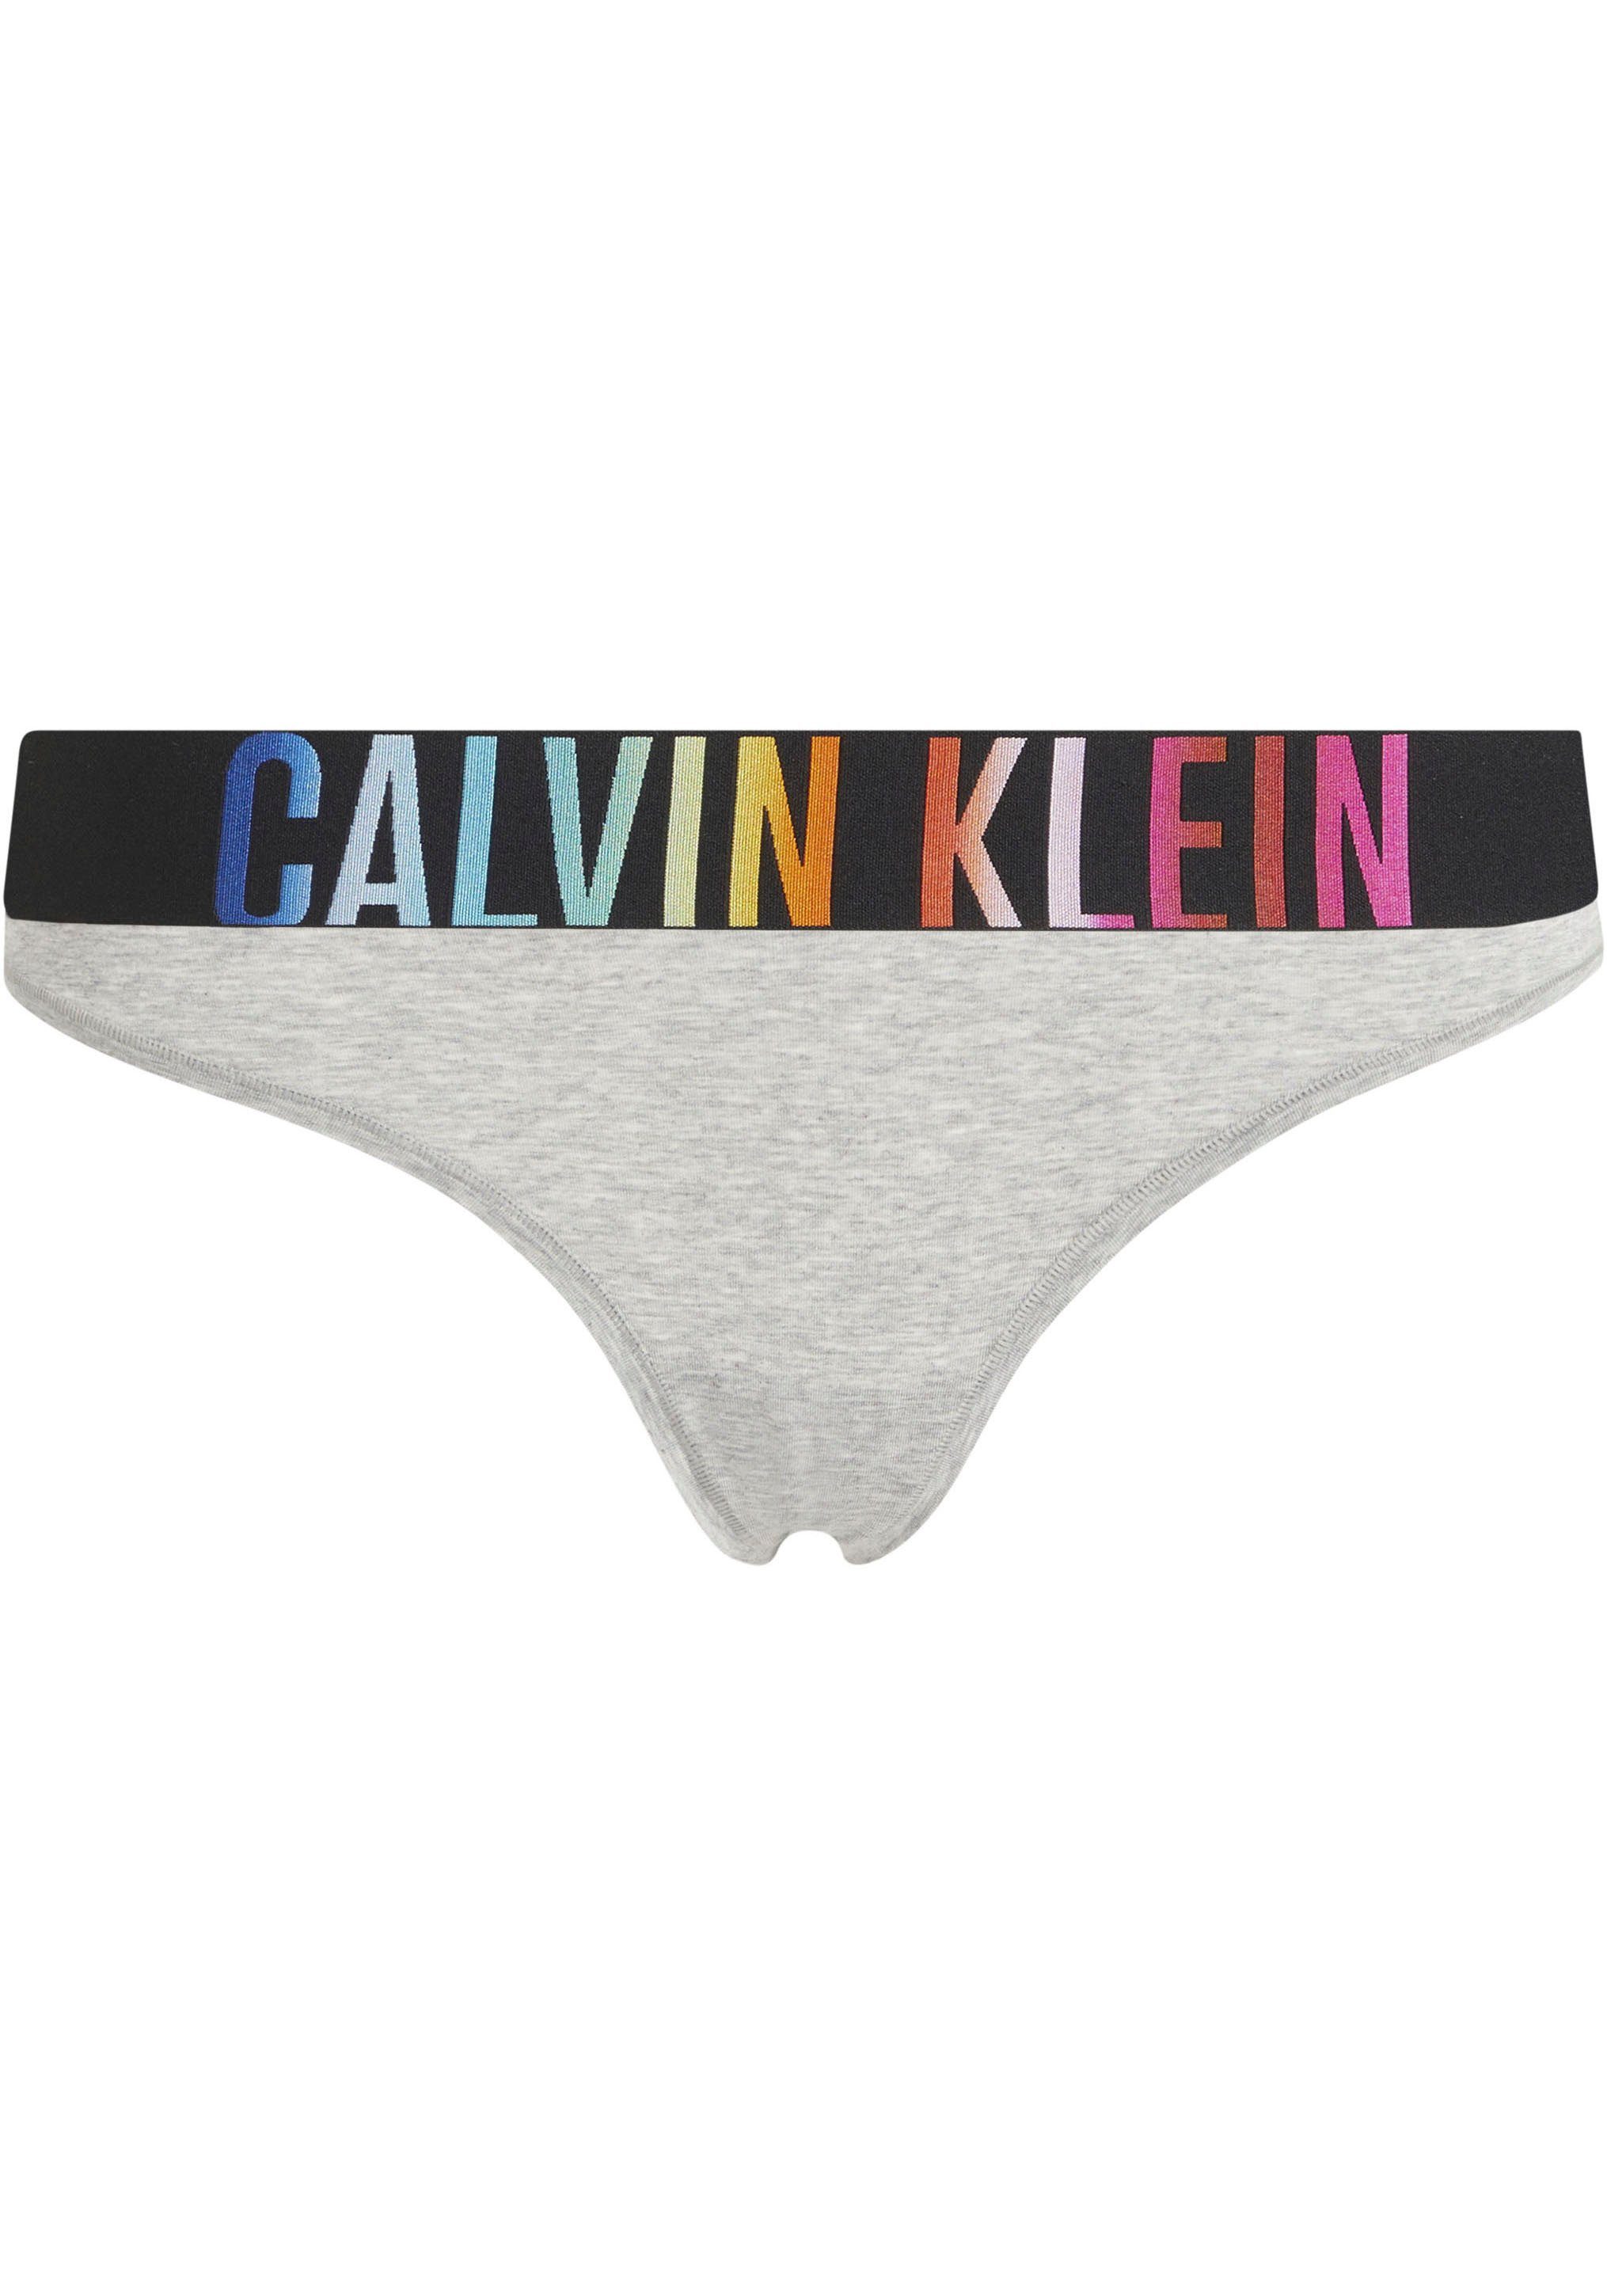 Calvin Klein Underwear String in gemêleerde look.